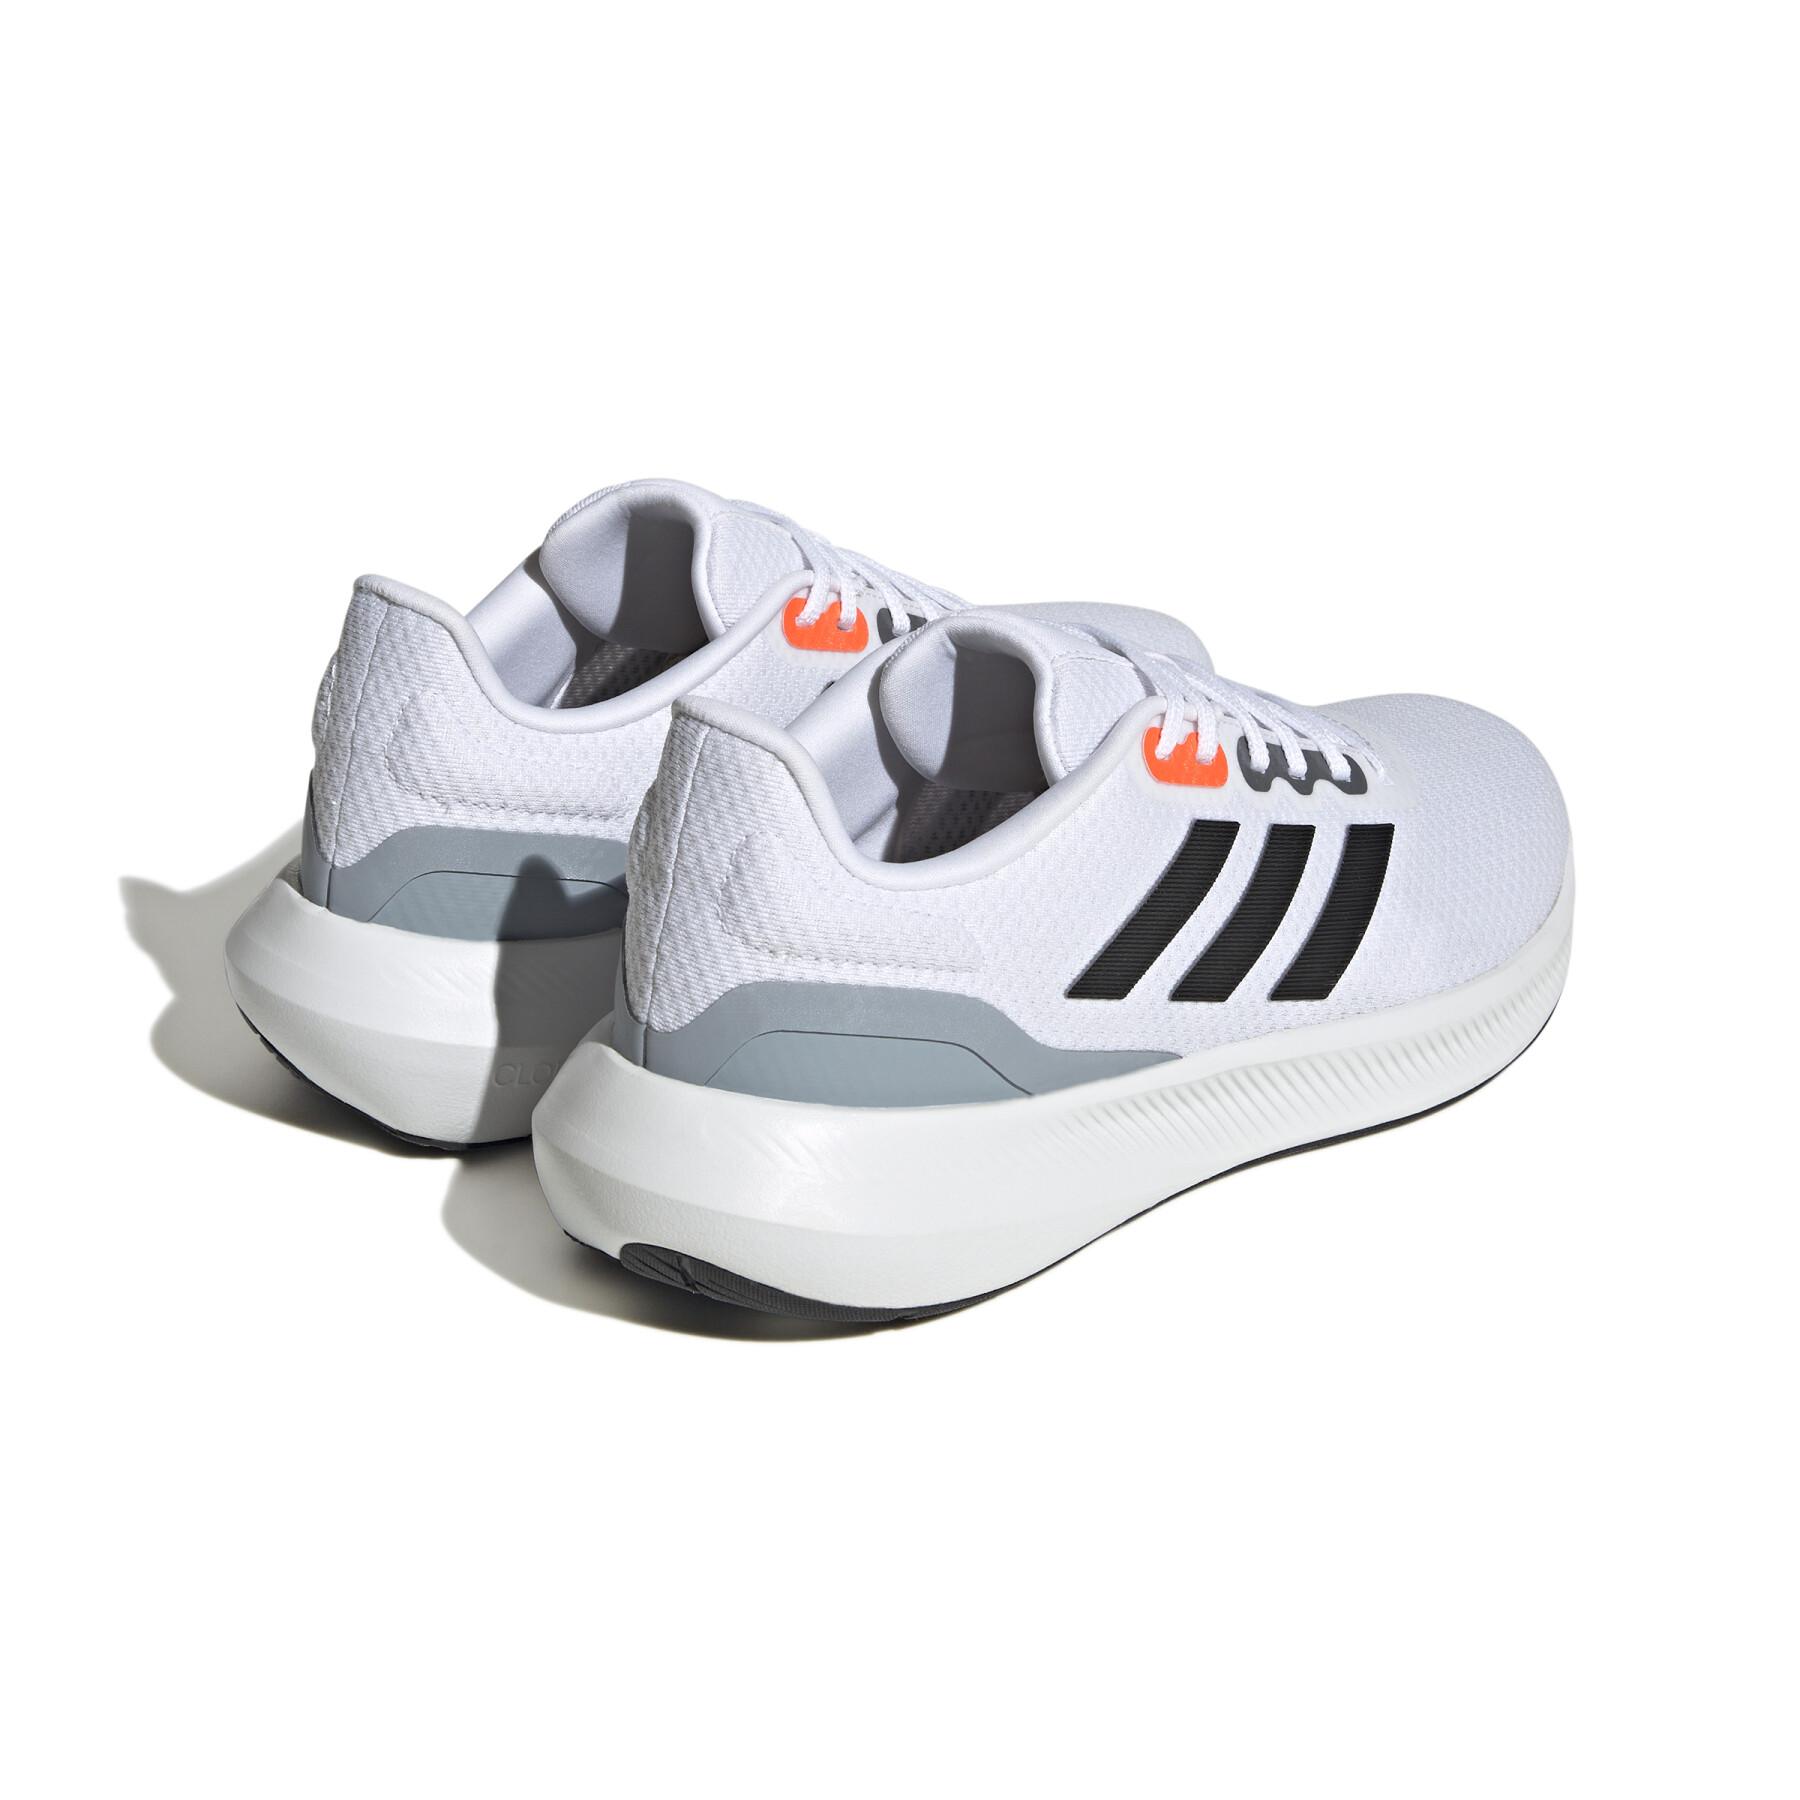 Running shoes adidas RunFalcon Wide 3